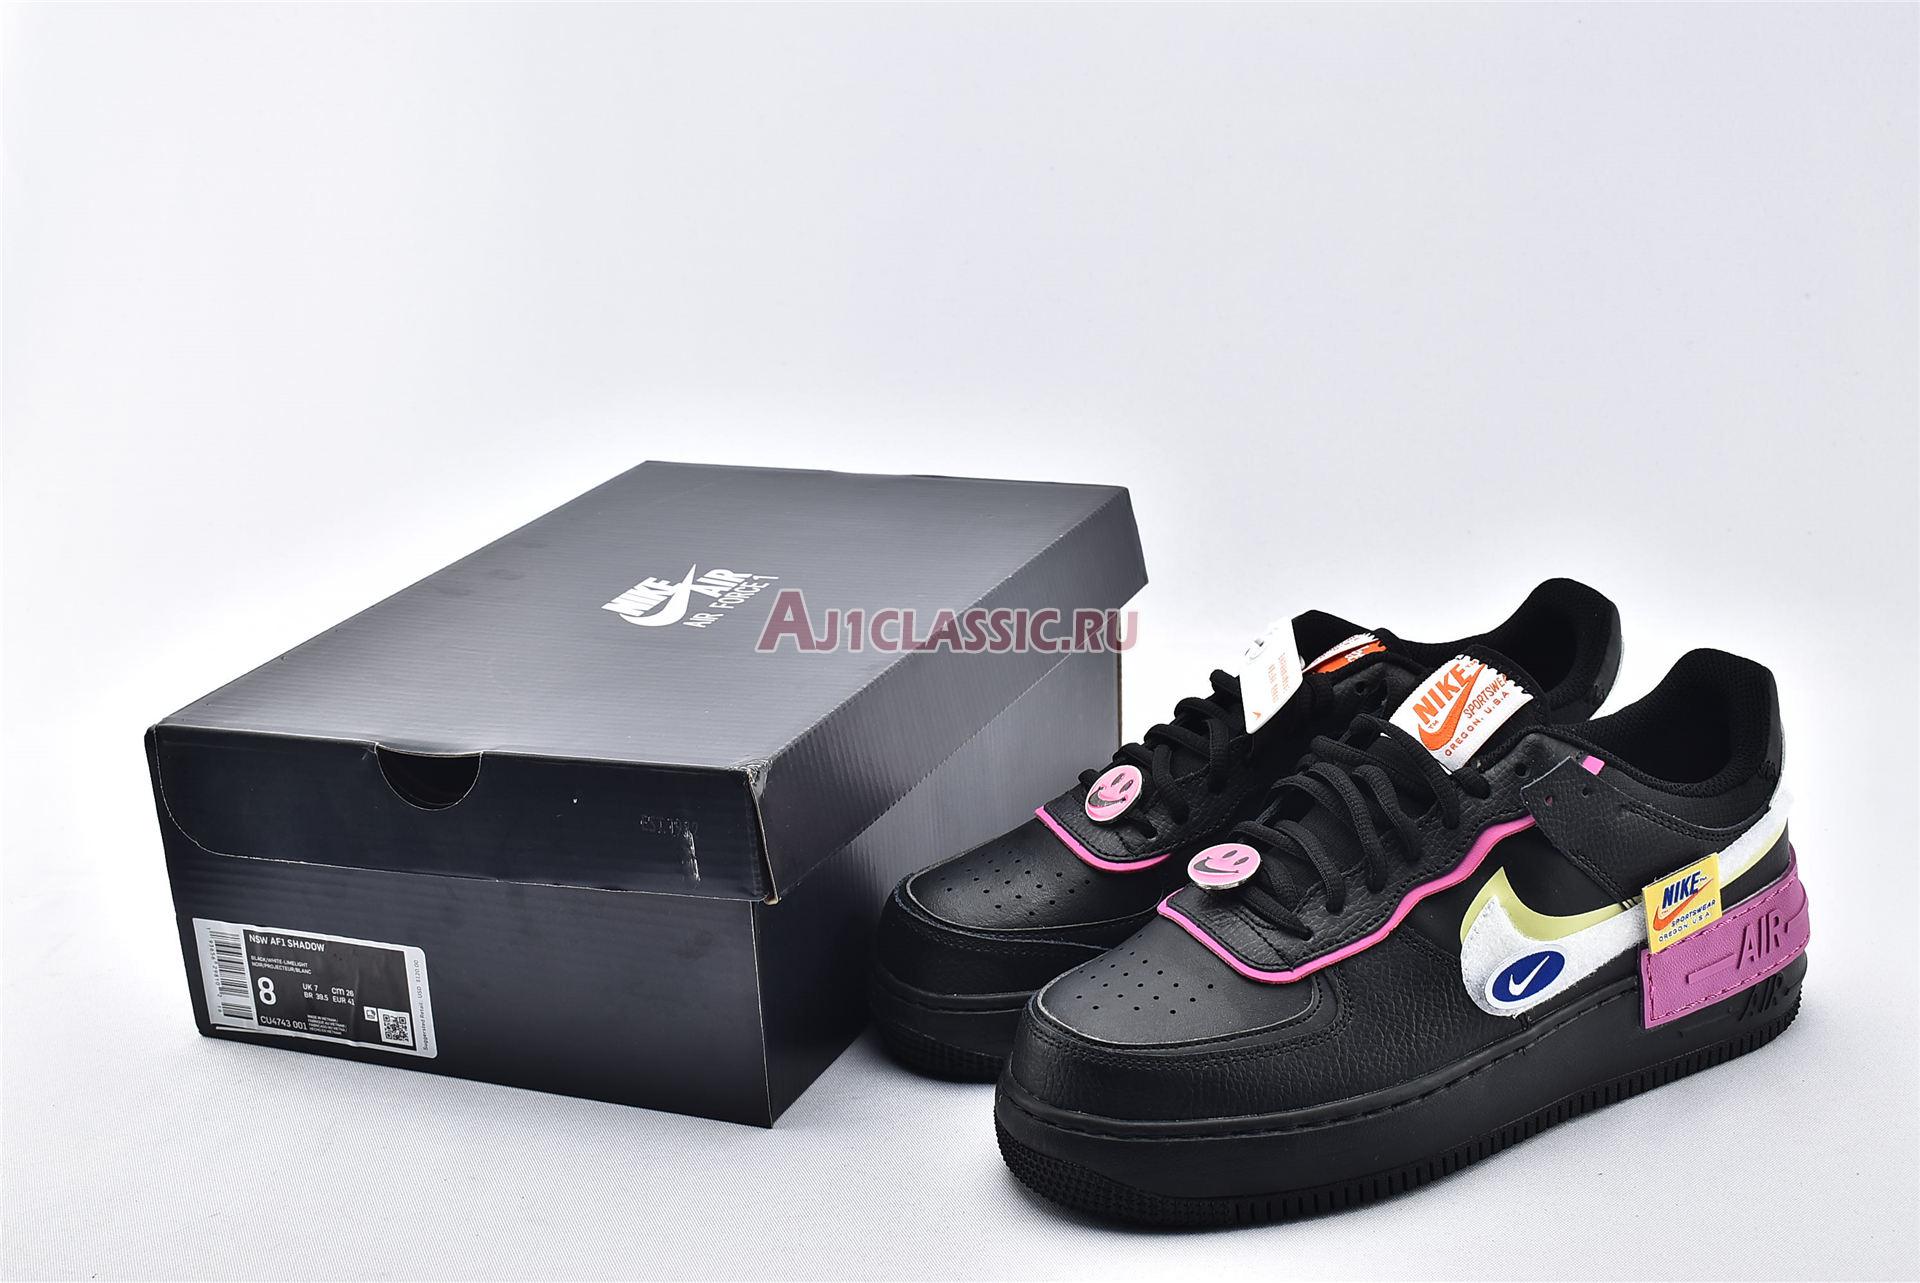 Nike Wmns Air Force 1 Shadow Cosmic Fuchsia CU4743-001 Black/Limelight/Cosmic Fuchsia/White Sneakers